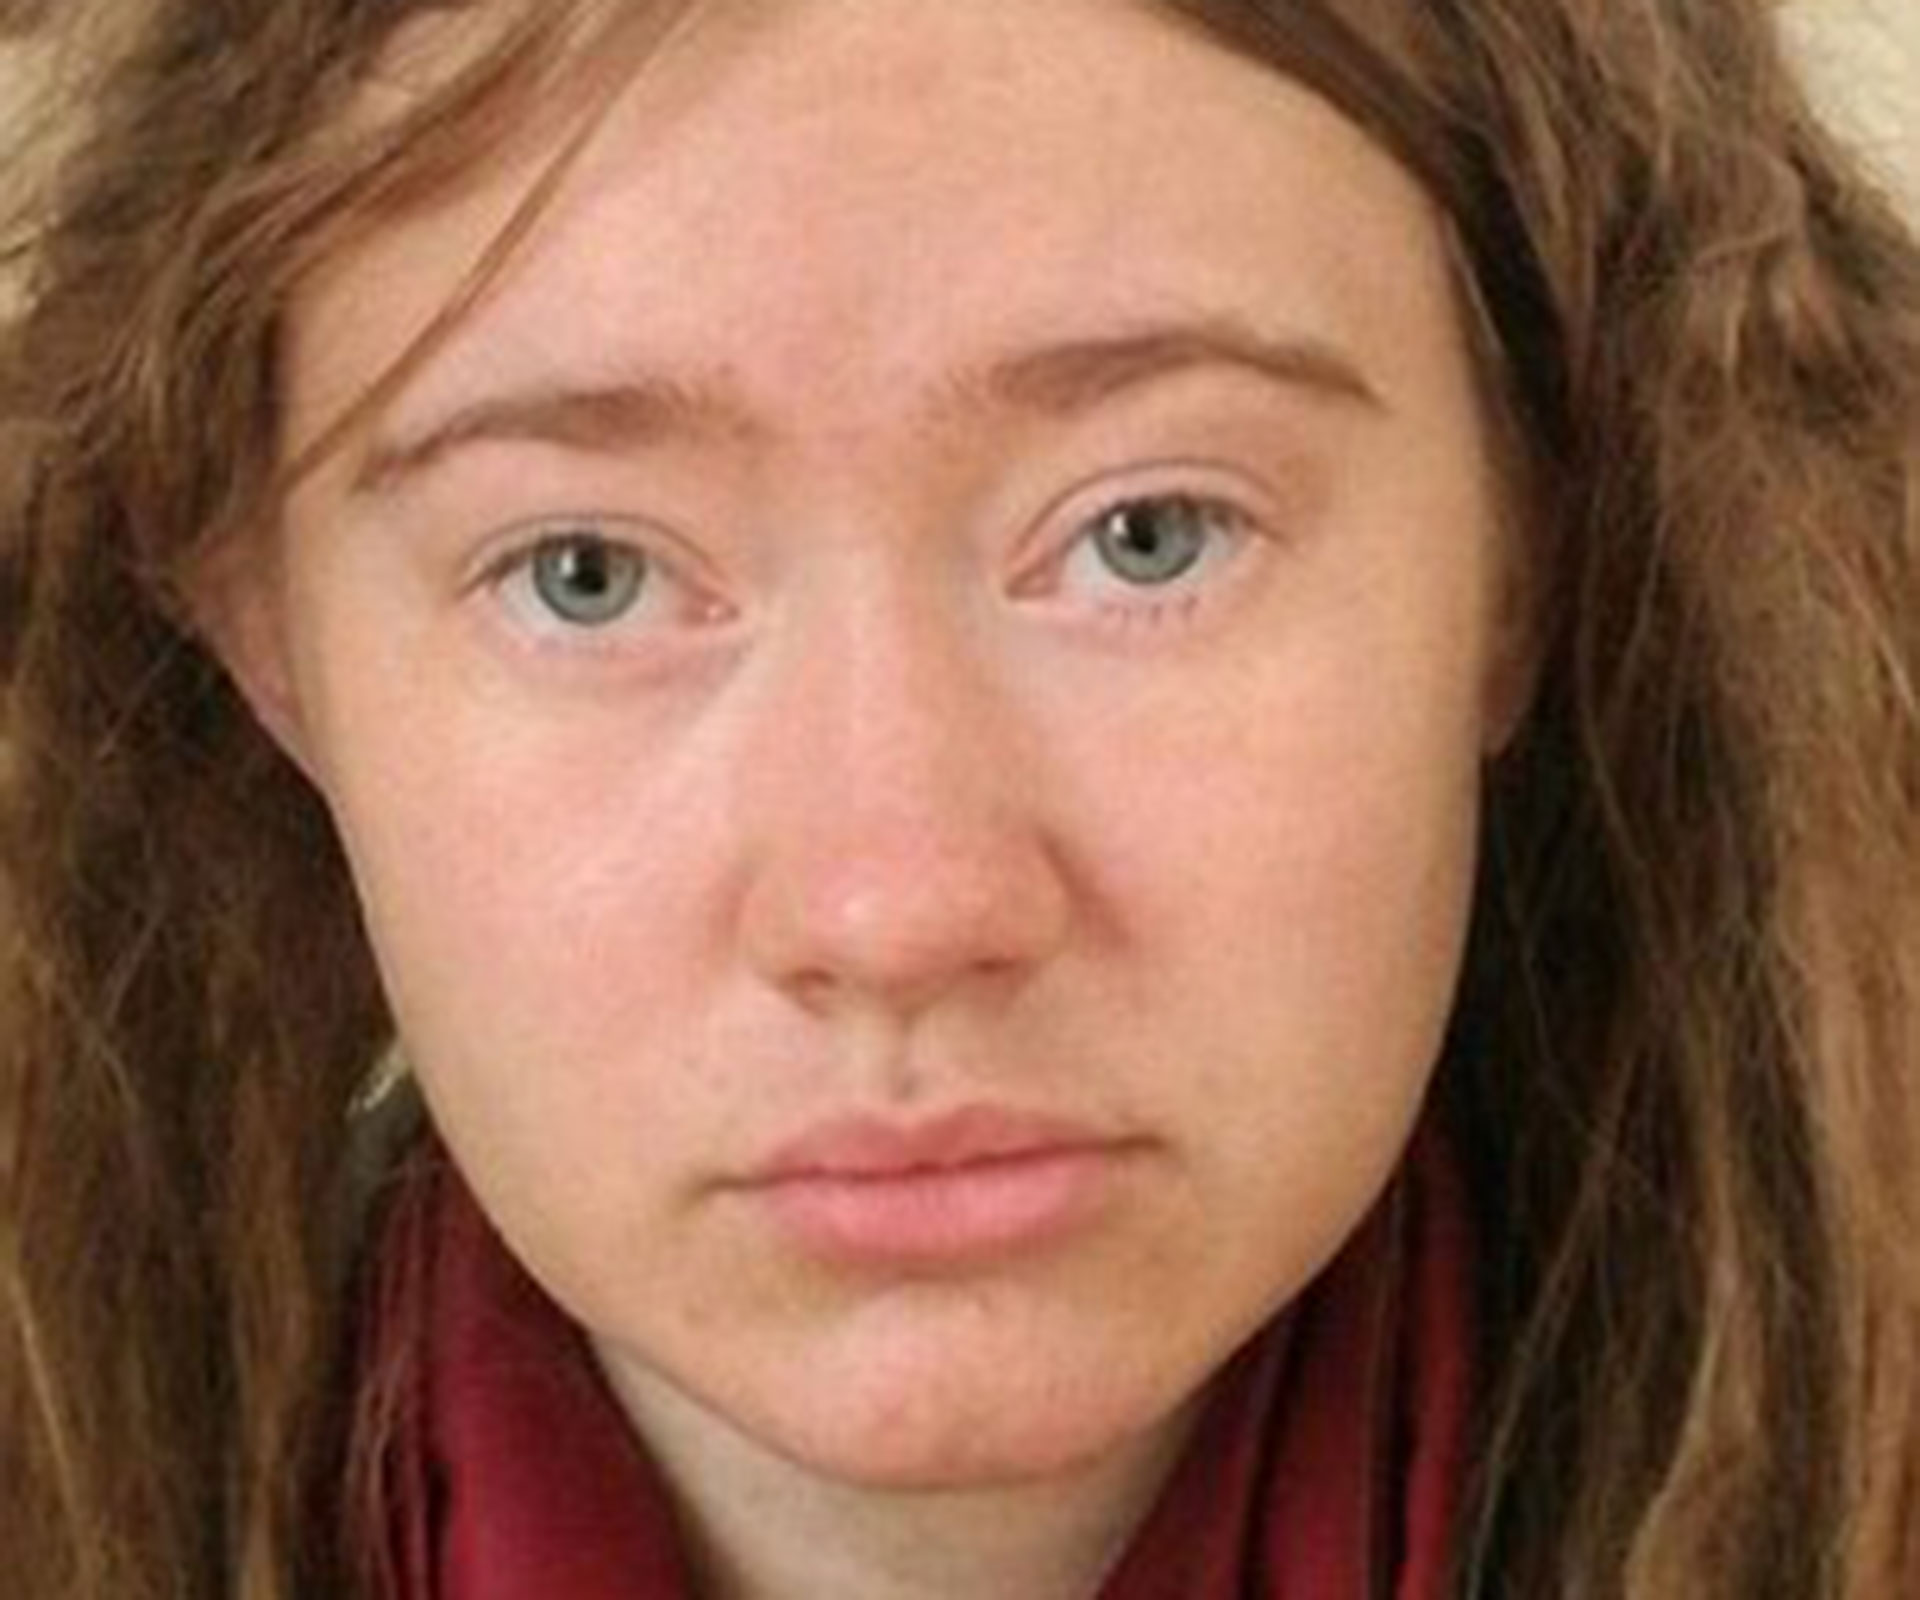 Update: homeless girl linked to Madeleine McCann has been identified